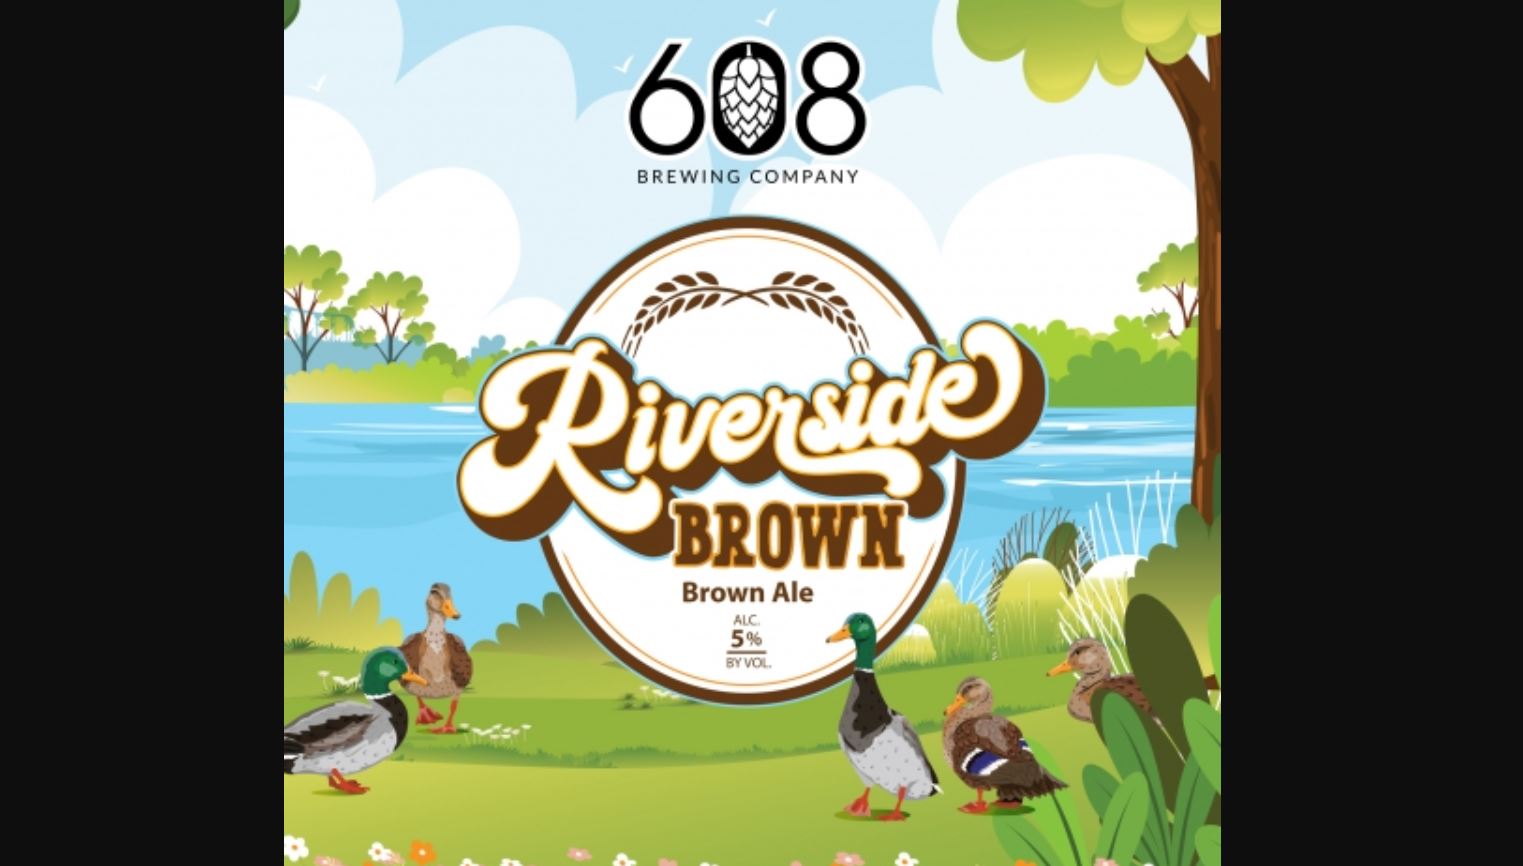 608 Riverside Brown